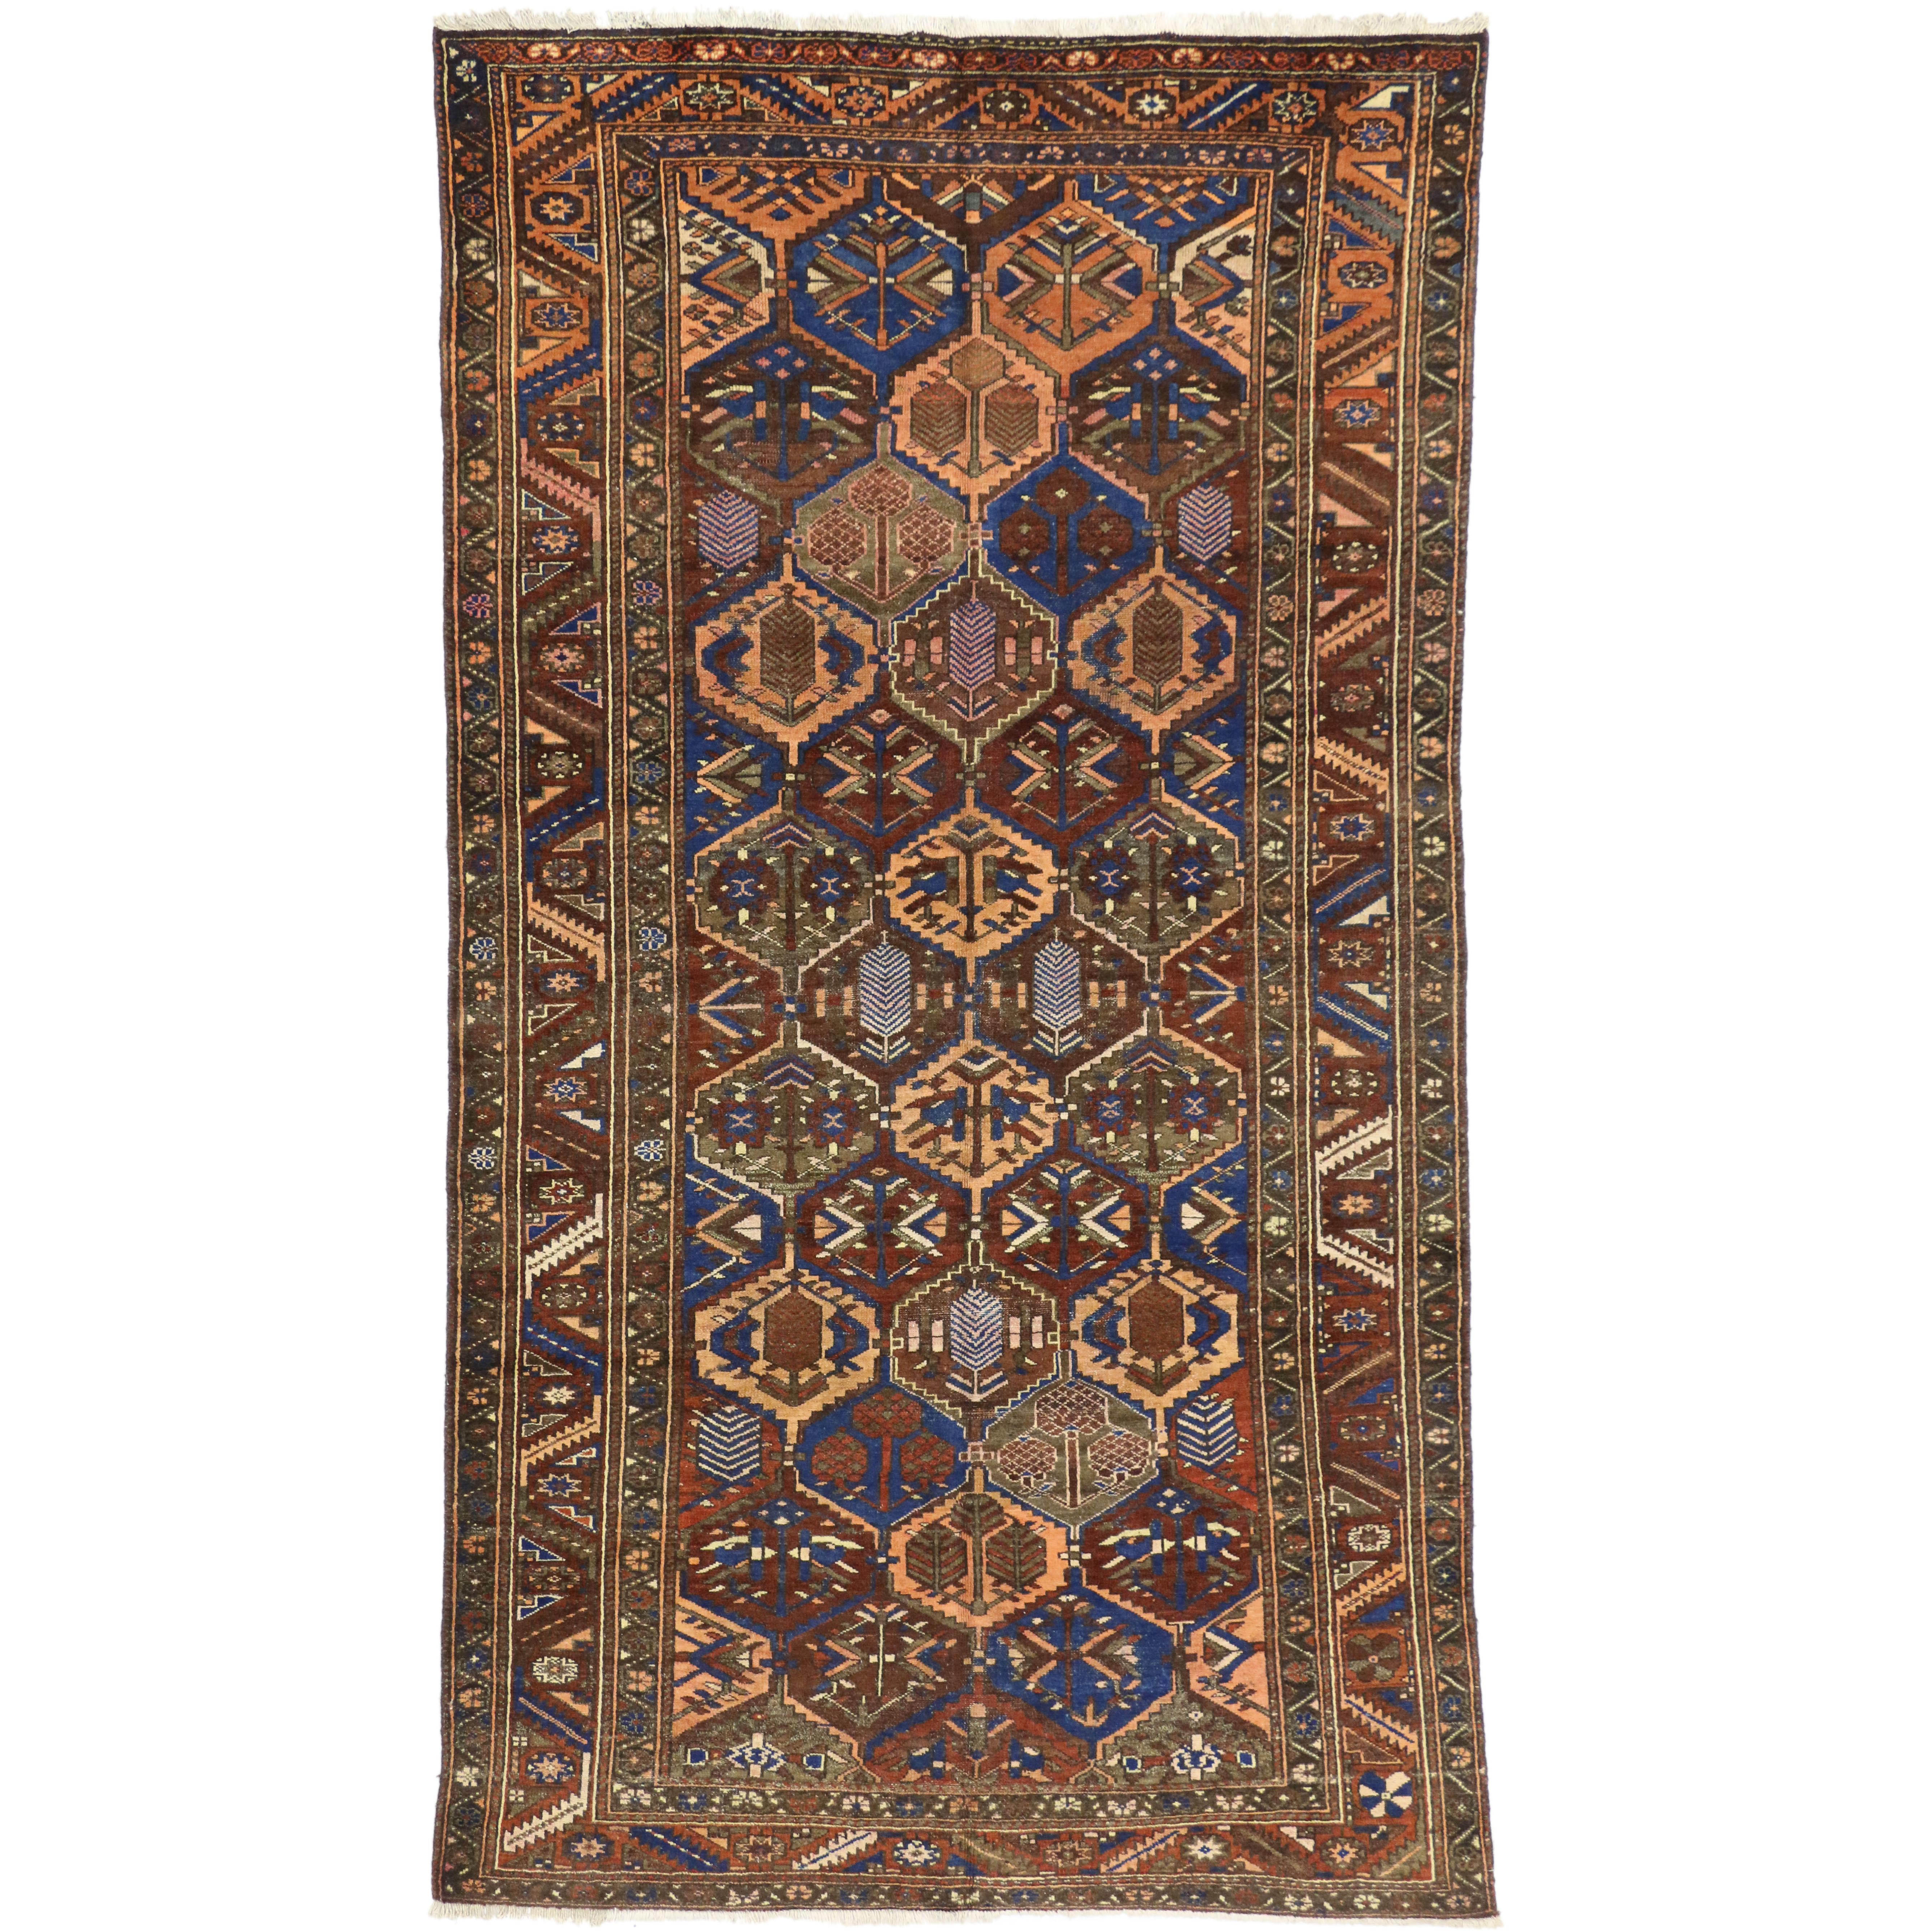 Antique Persian Bakhtiari Rug, Biophilic Design Meets Beguiling Elegance